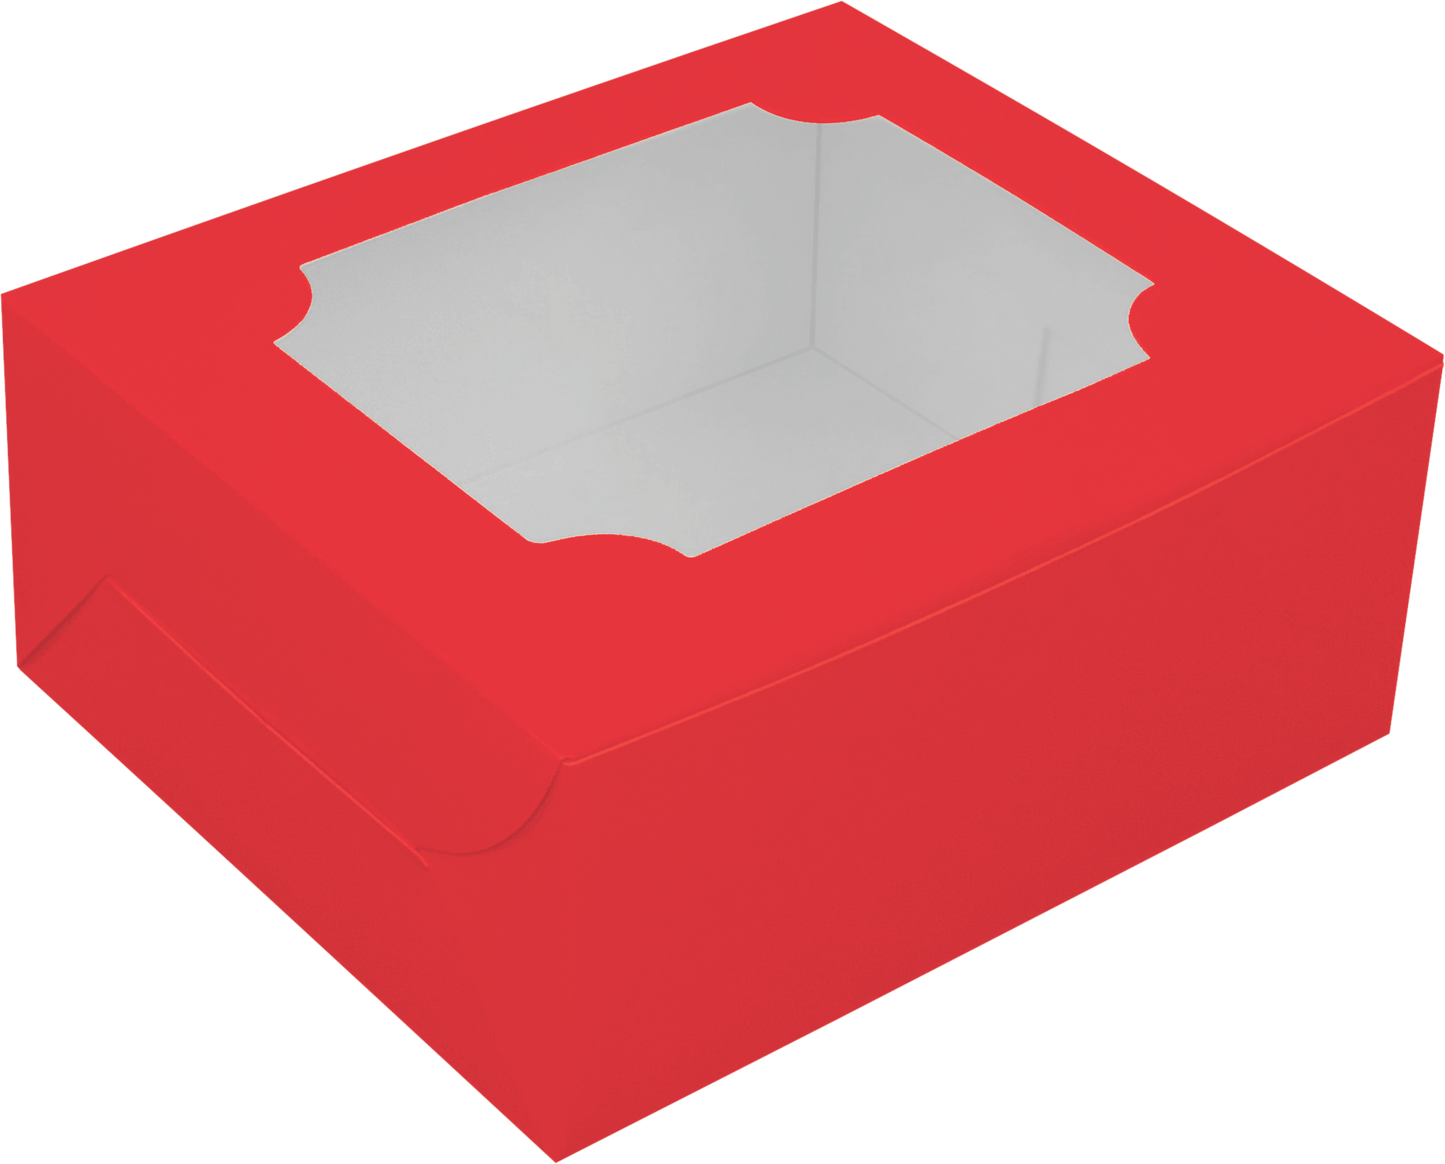 DONUT BOX (7x6x3 INCHES)